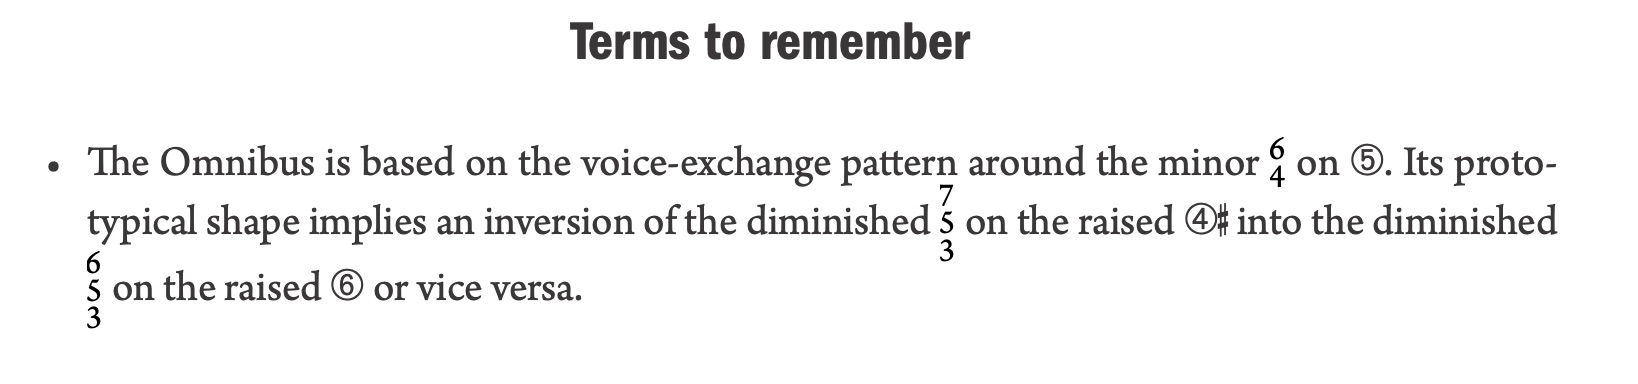 ijzerman terms to remember 9.5a.jpg